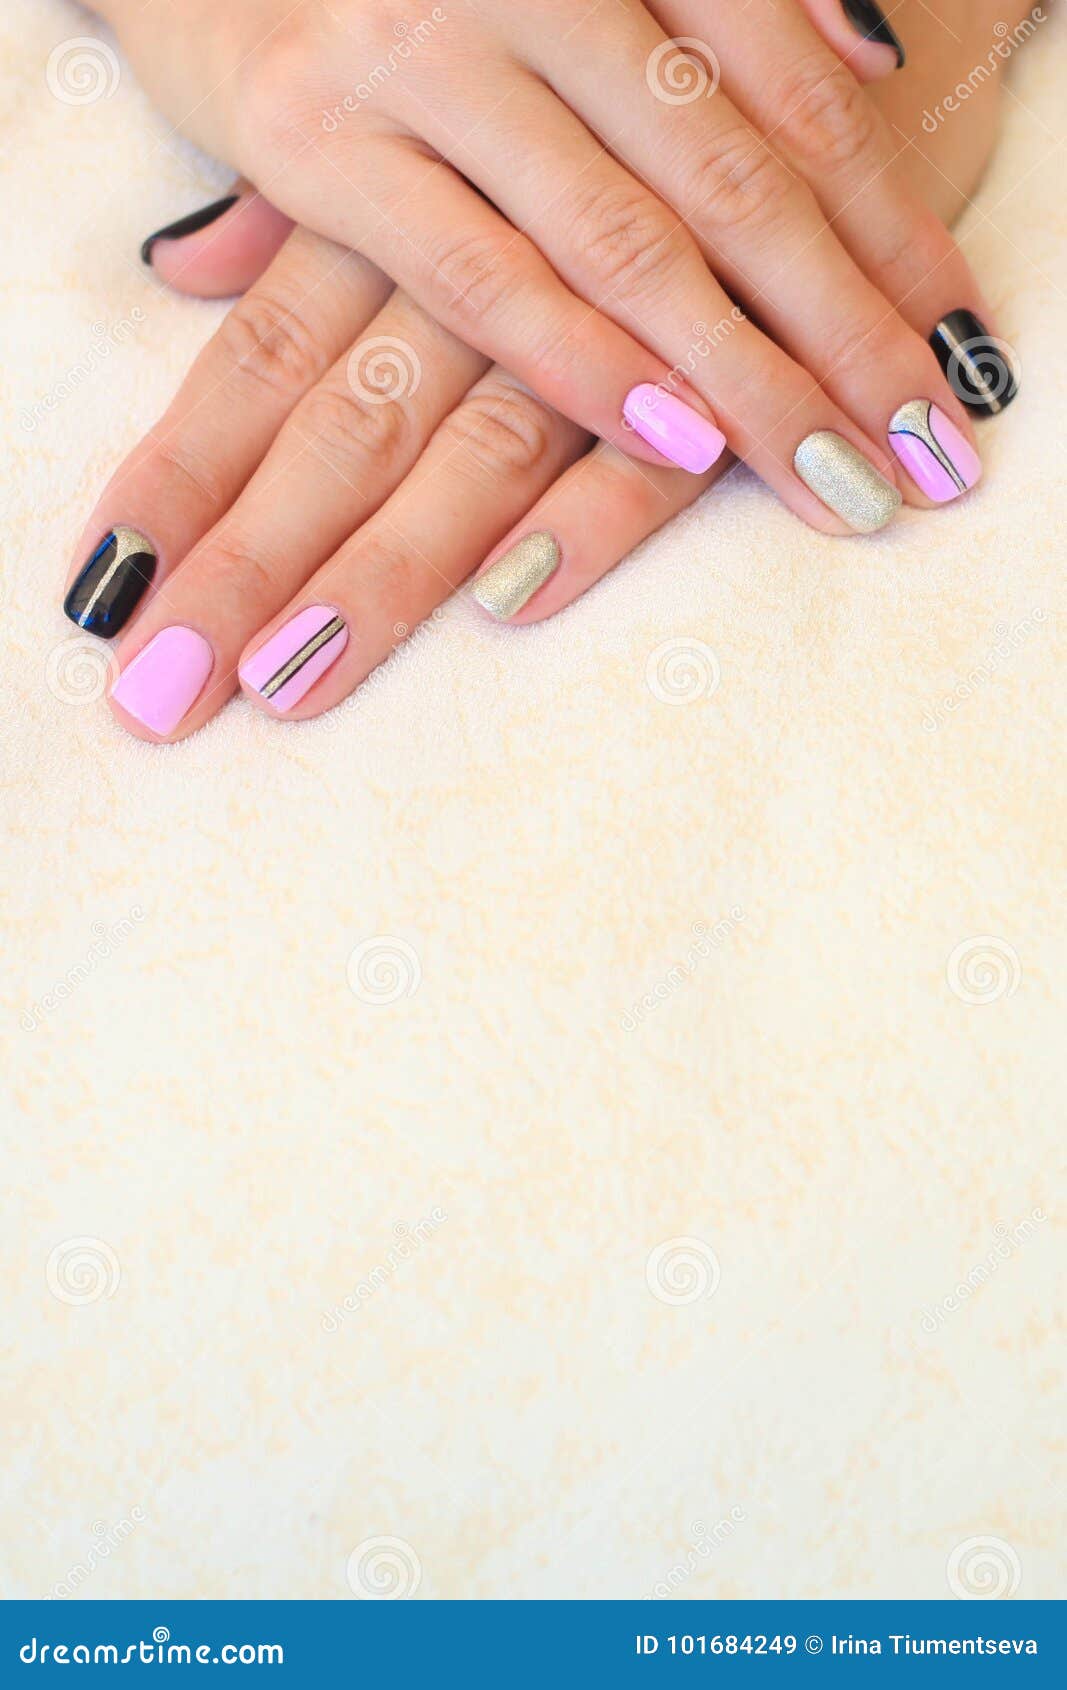 Stylish Nails Nailpolish Nail Art Design For The Fashion Style